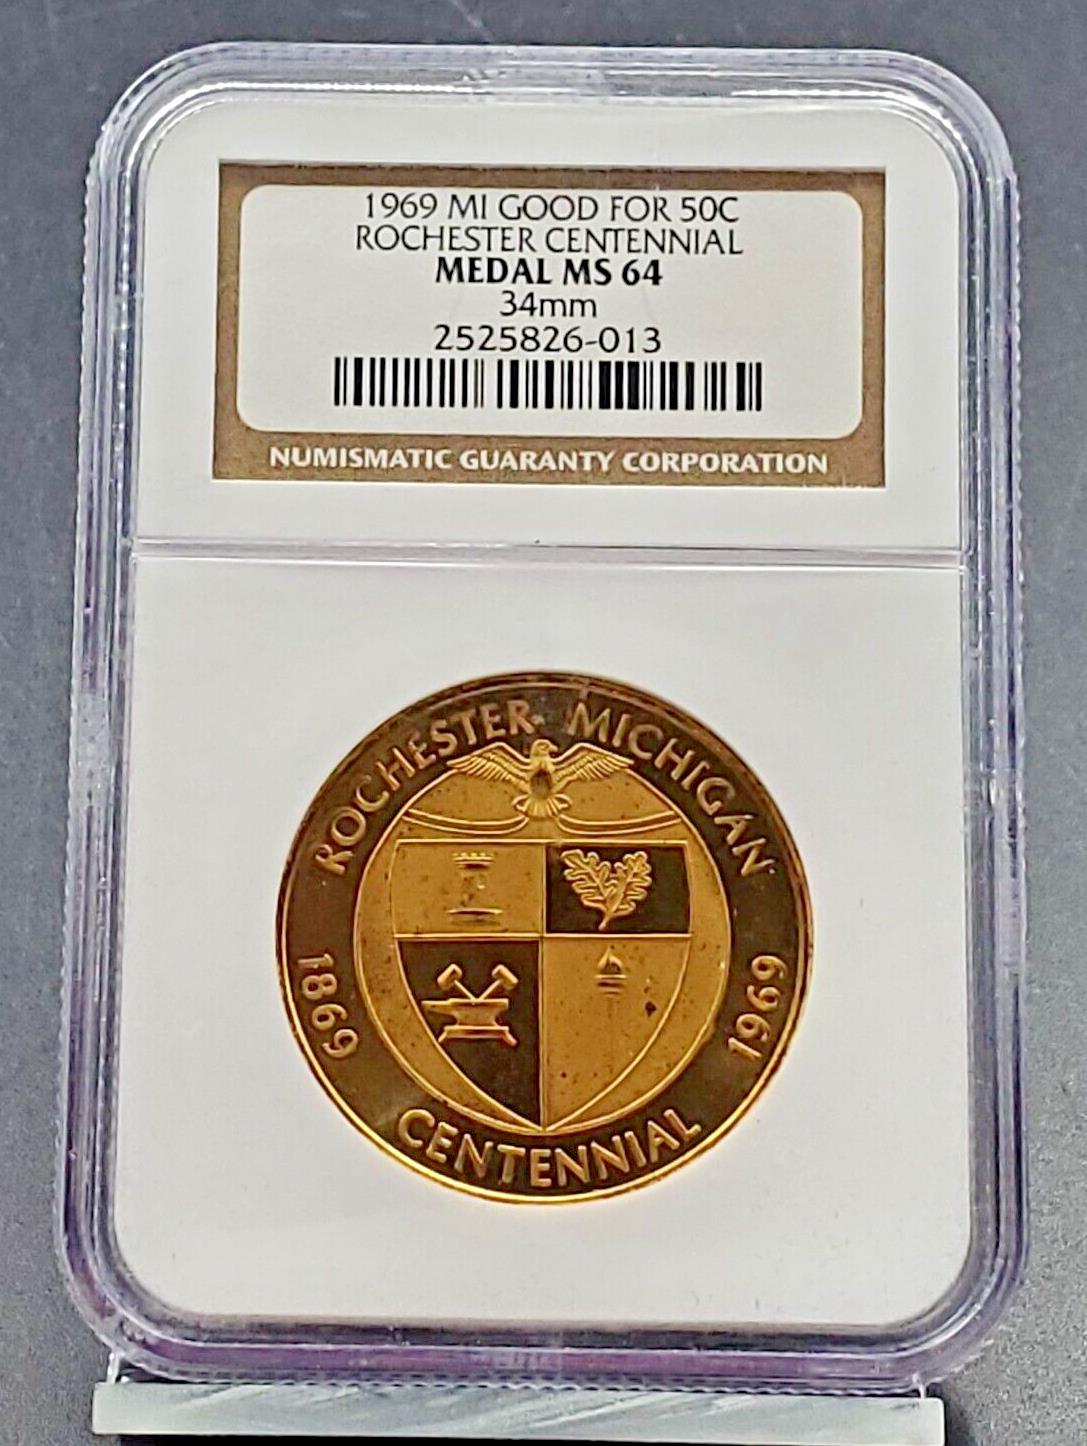 1969 MI Good for 50c Rochester Centennial NGC Medal MS64 34mm